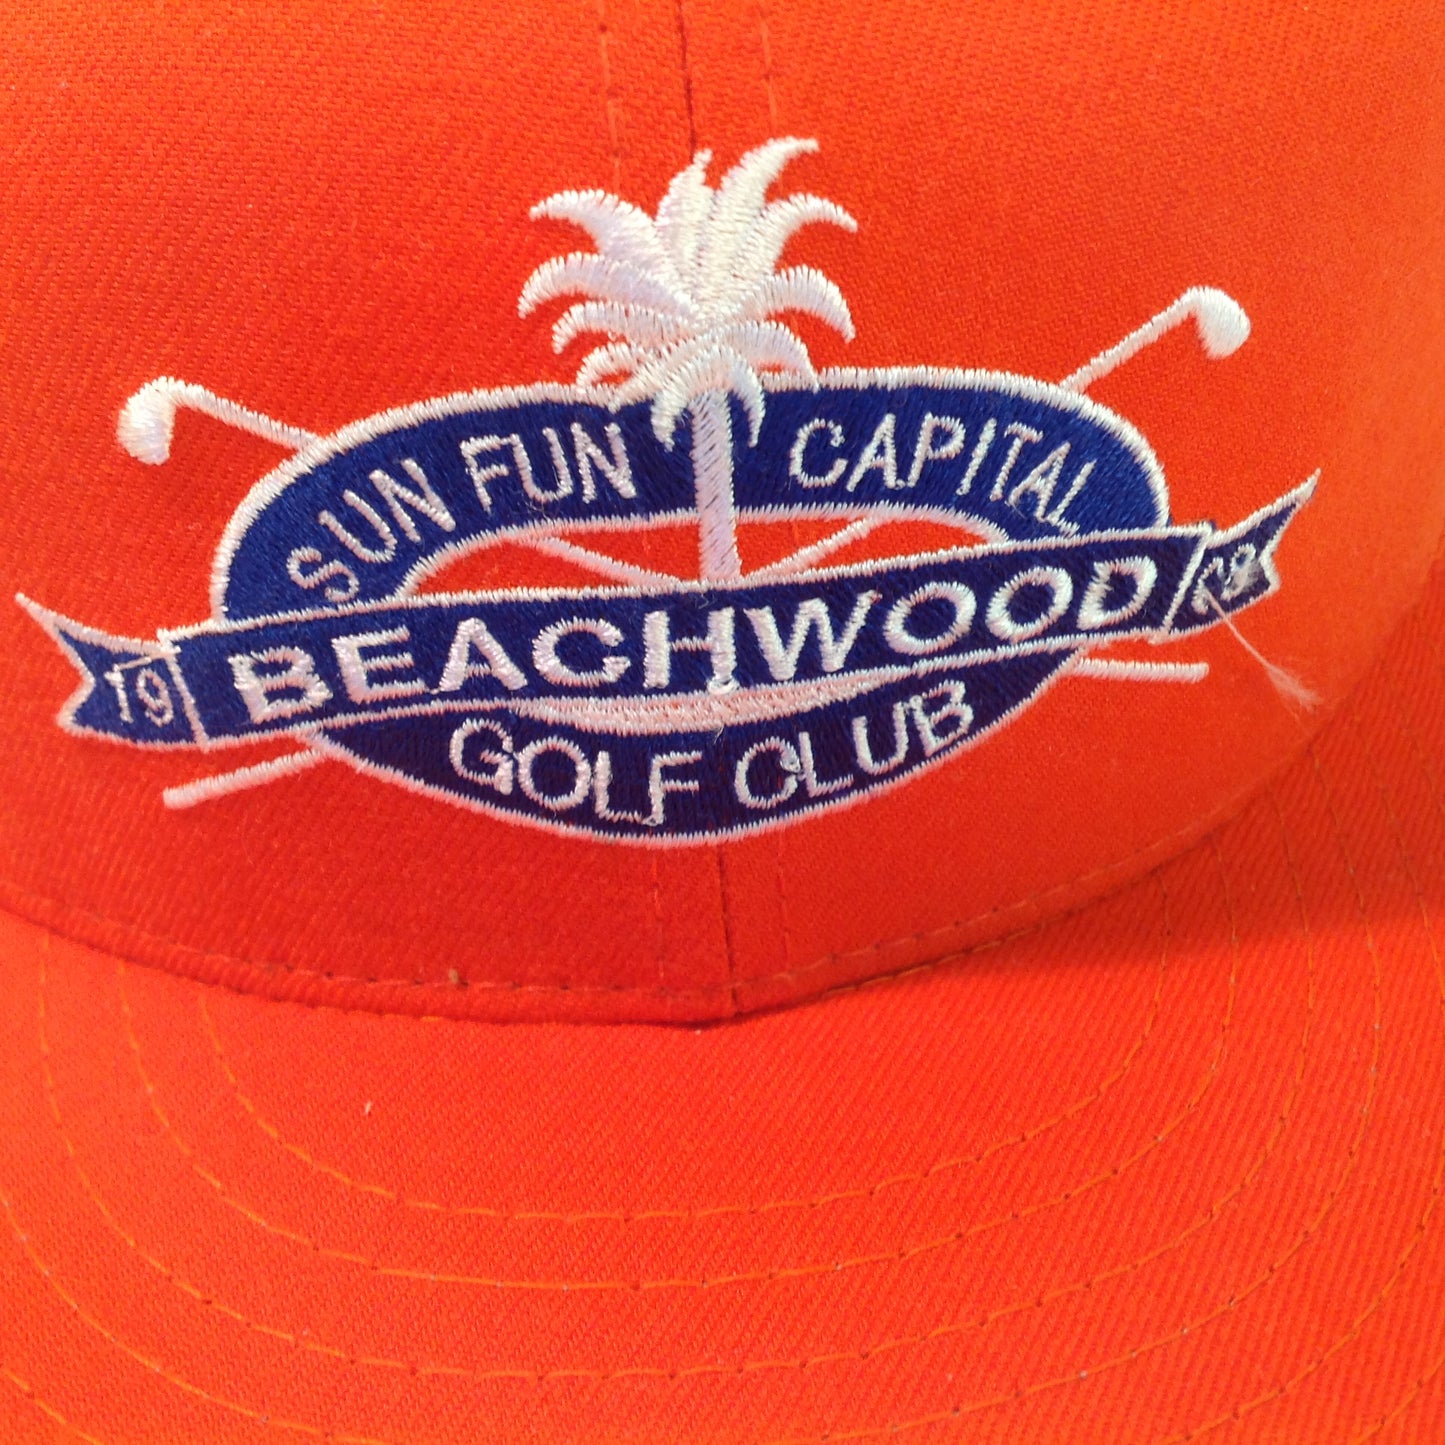 Vintage 1988 New Era 5950 Pro Model Beachwood Golf Club Sun Fun Capital North Myrtle Beach Tournament Souvenir Orange Baseball Cap